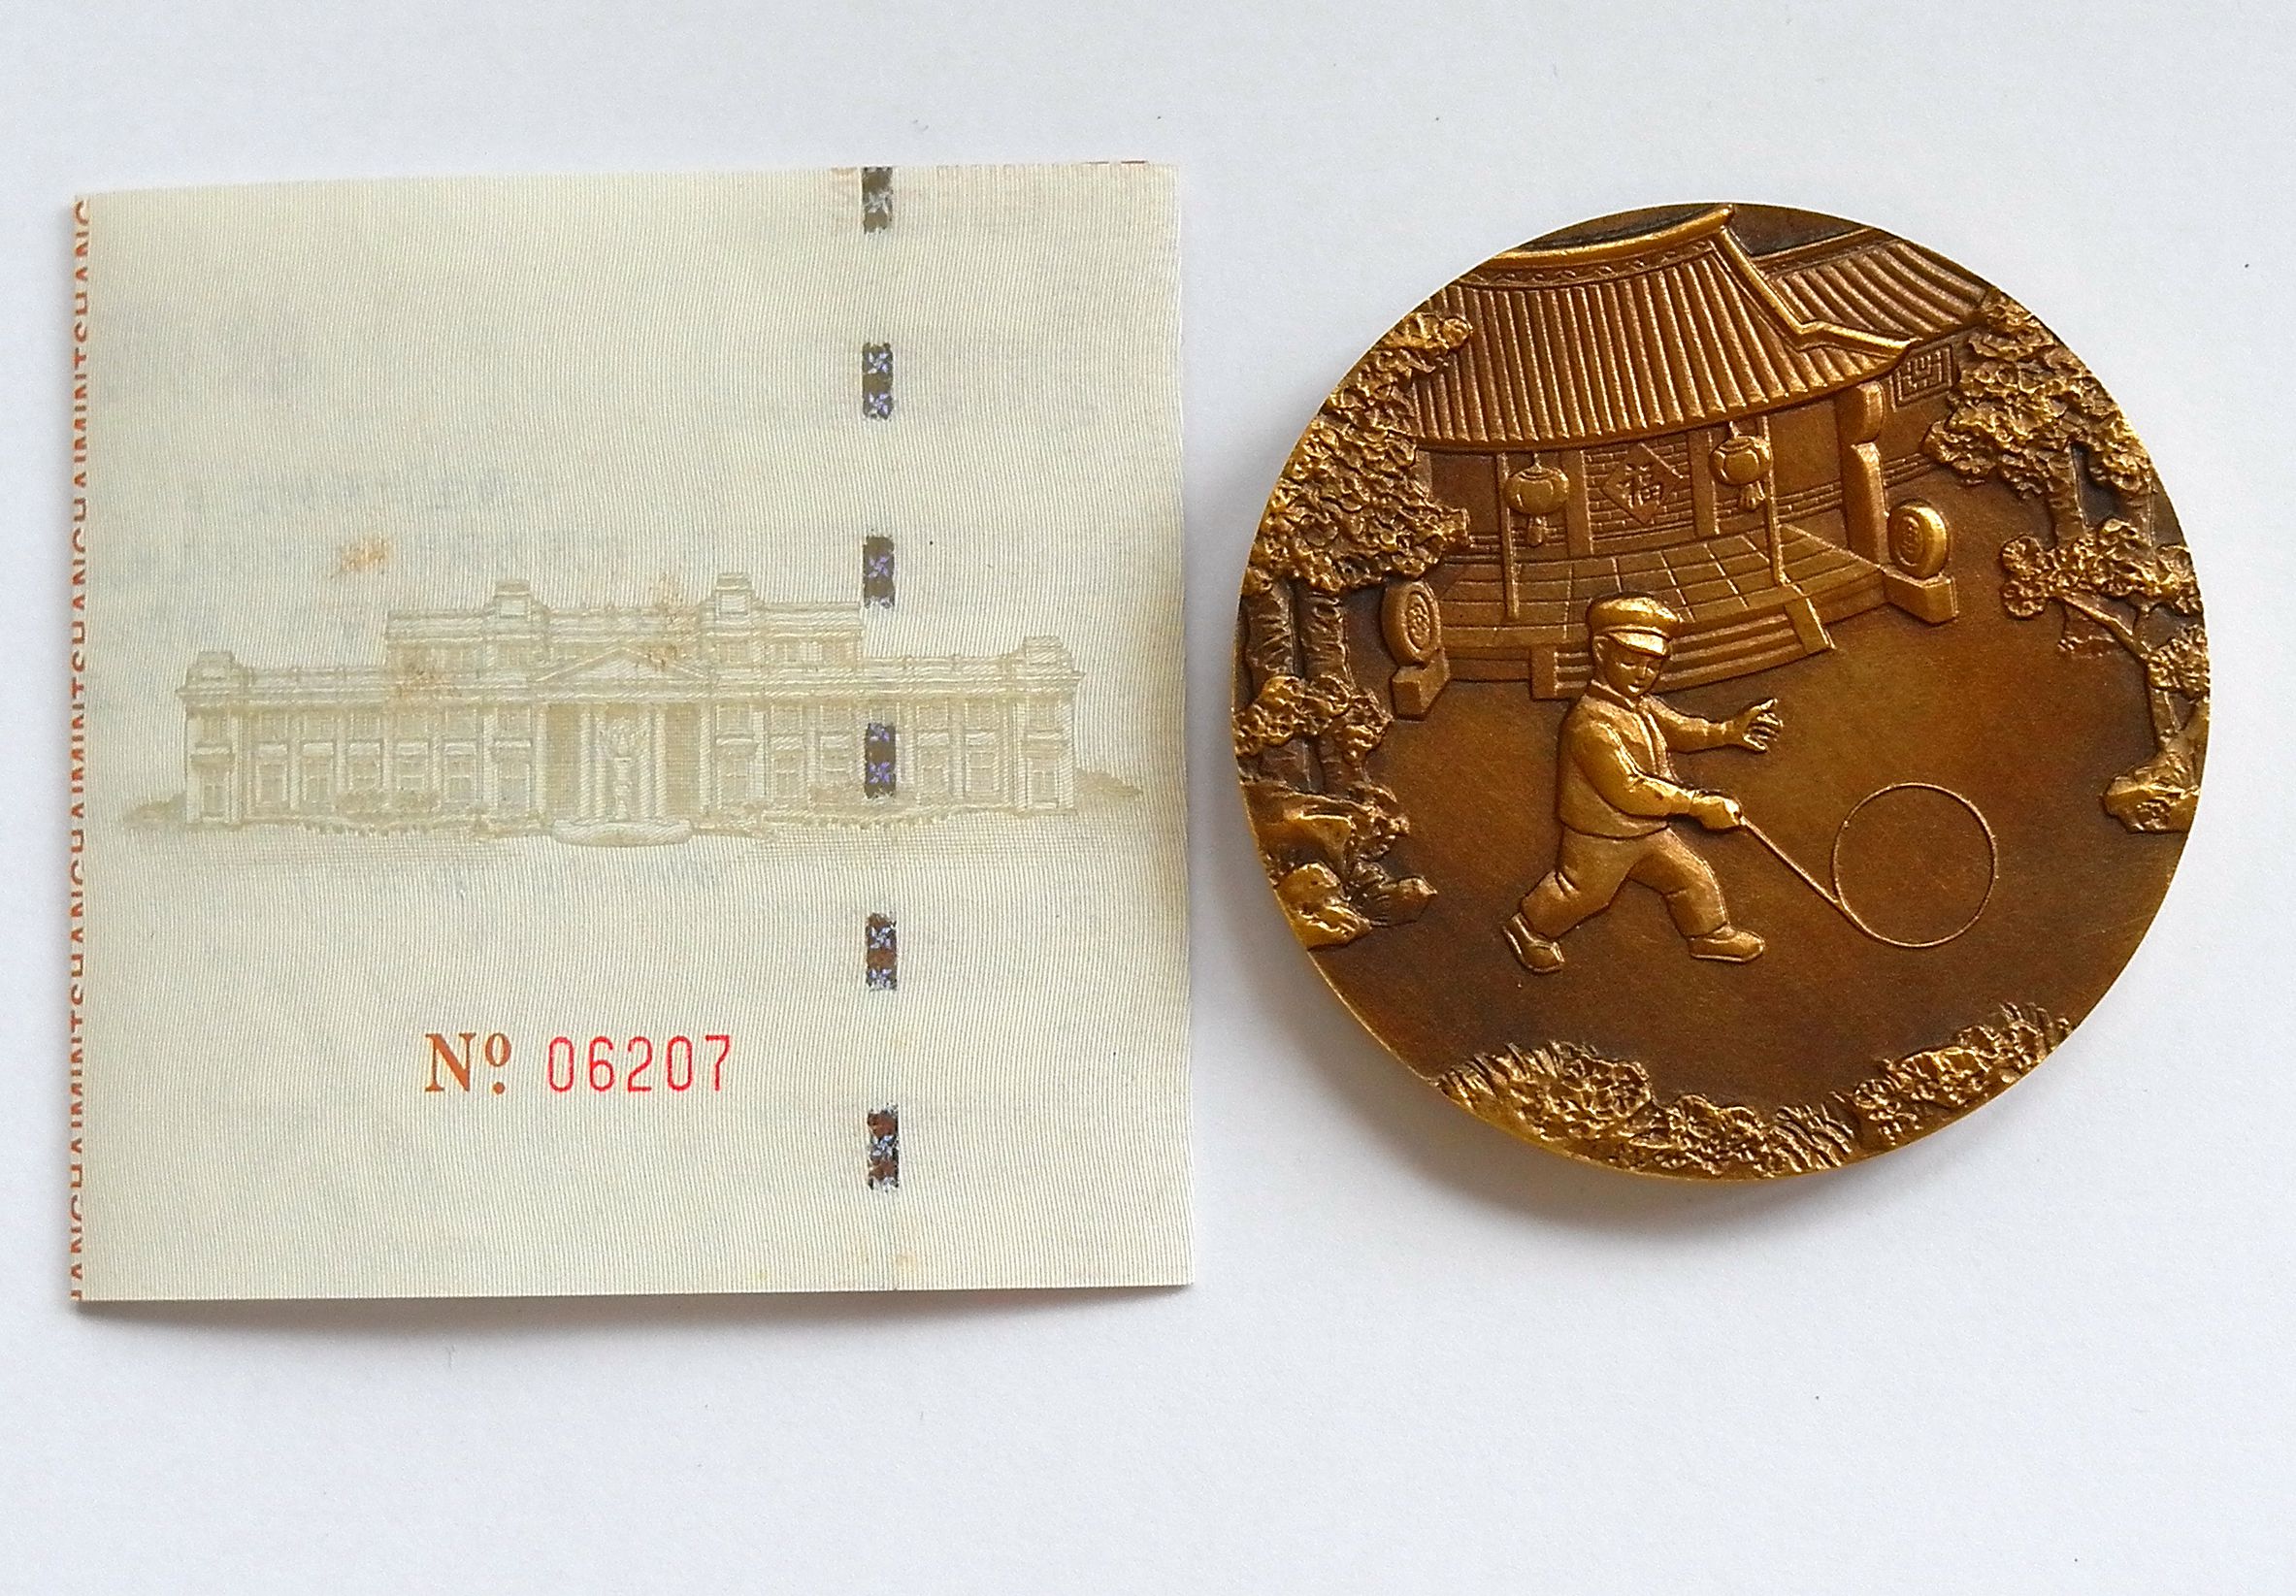 K8505, China Sheep Year Cartoon Large Bronze Medal, Shanghai Mint 2015